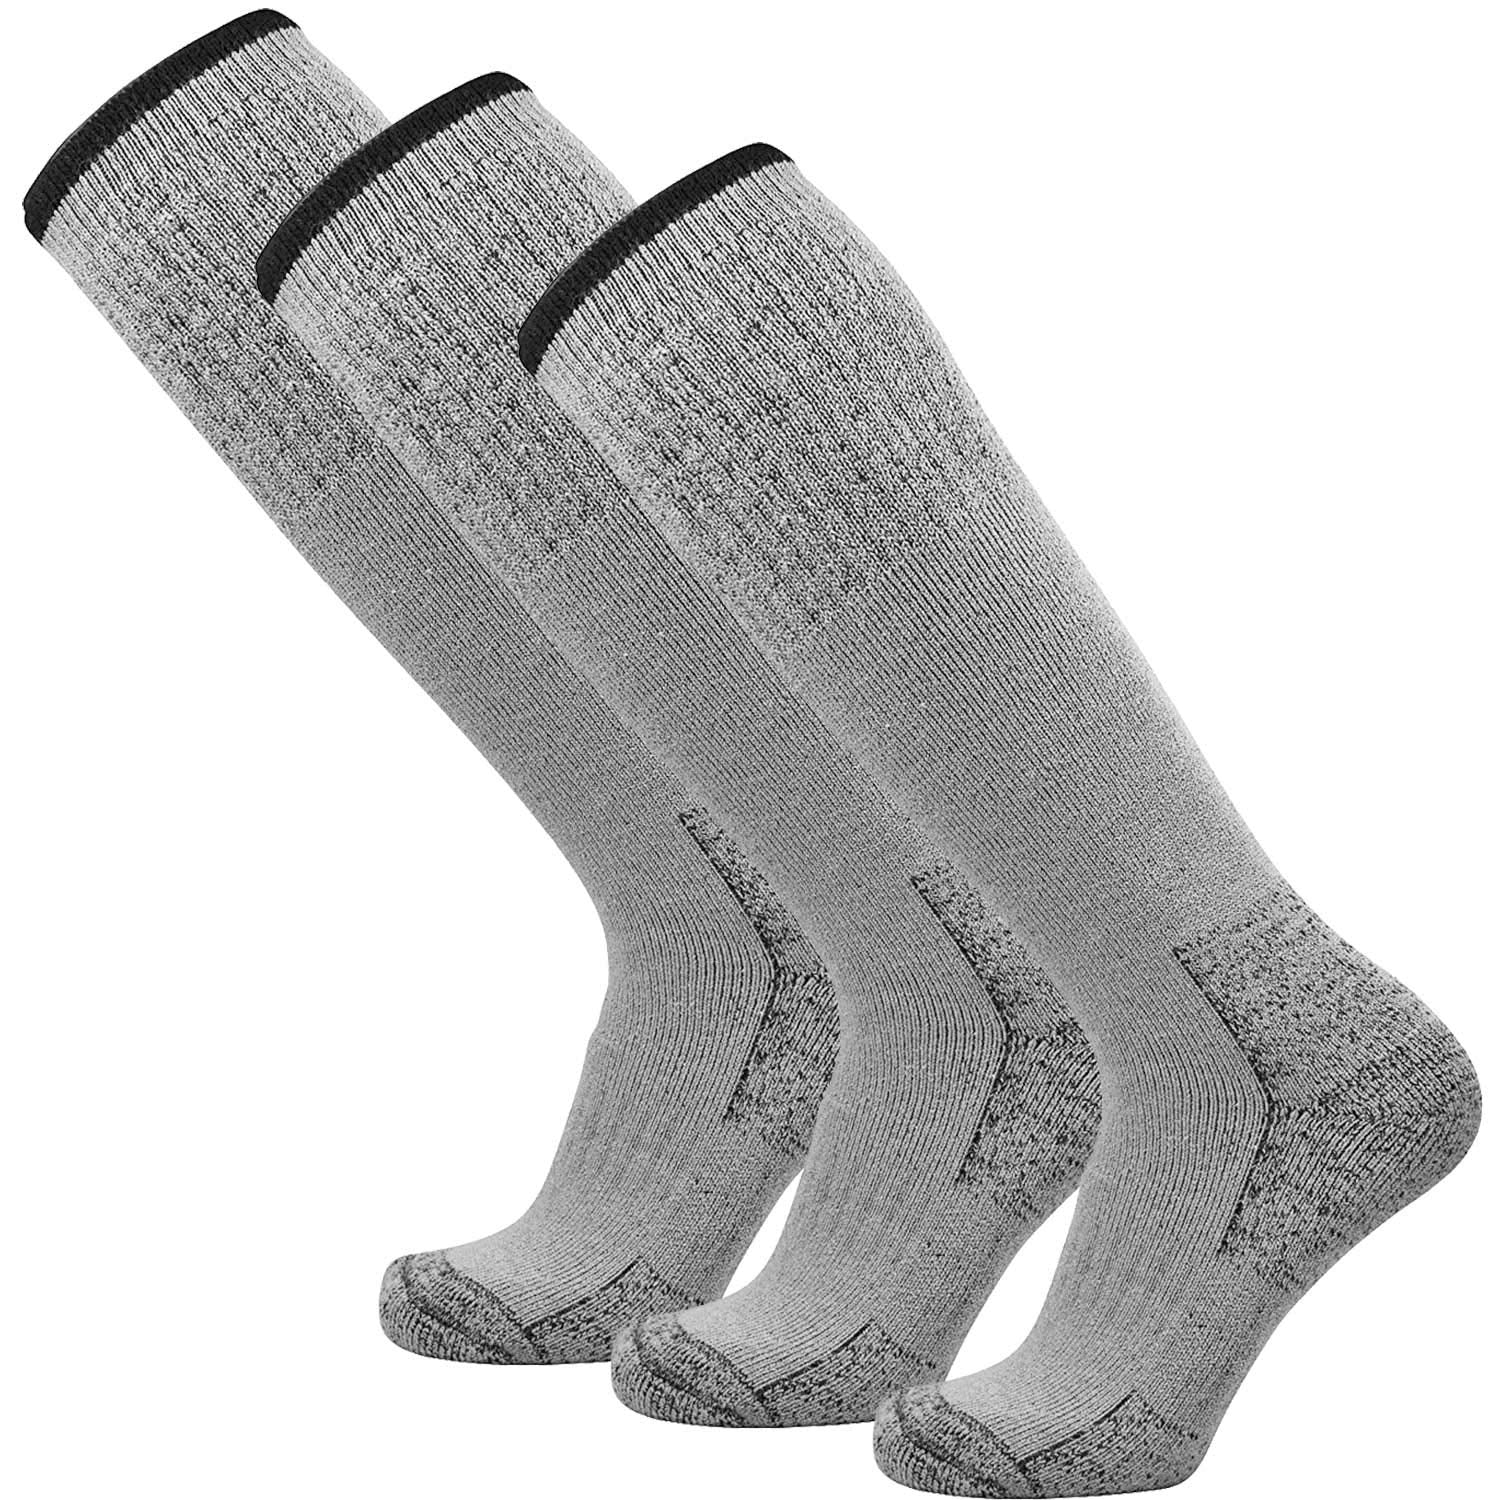 Heavy Work Boot Socks Sports & Everyday Socks Pure Athlete